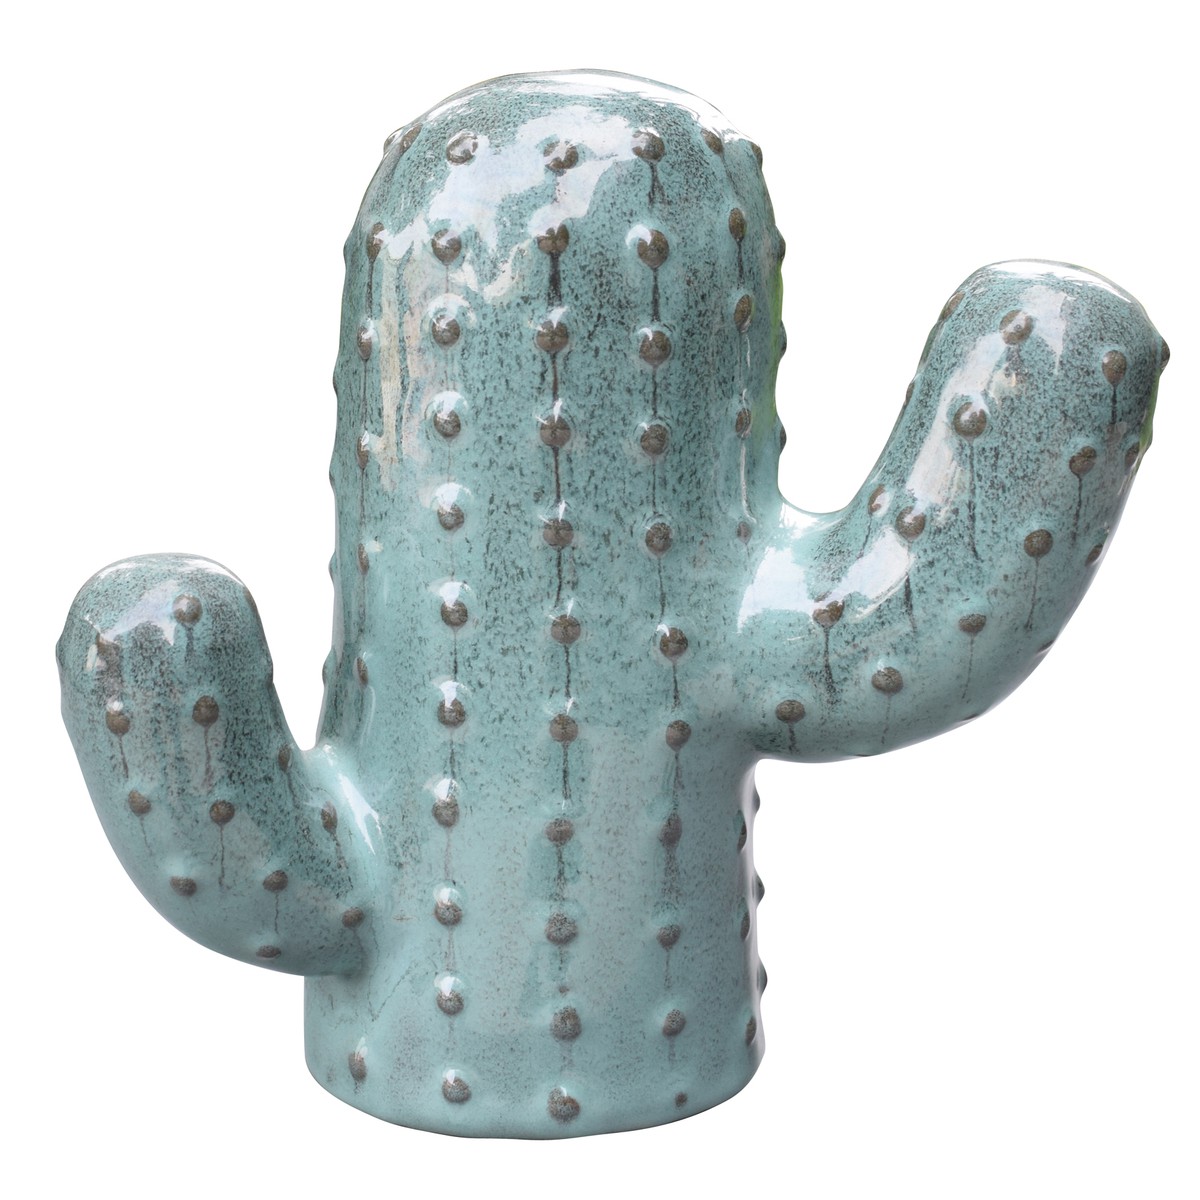   deco cactus l25,5 vert menthe Vert menthe 25.5x12x24.5cm